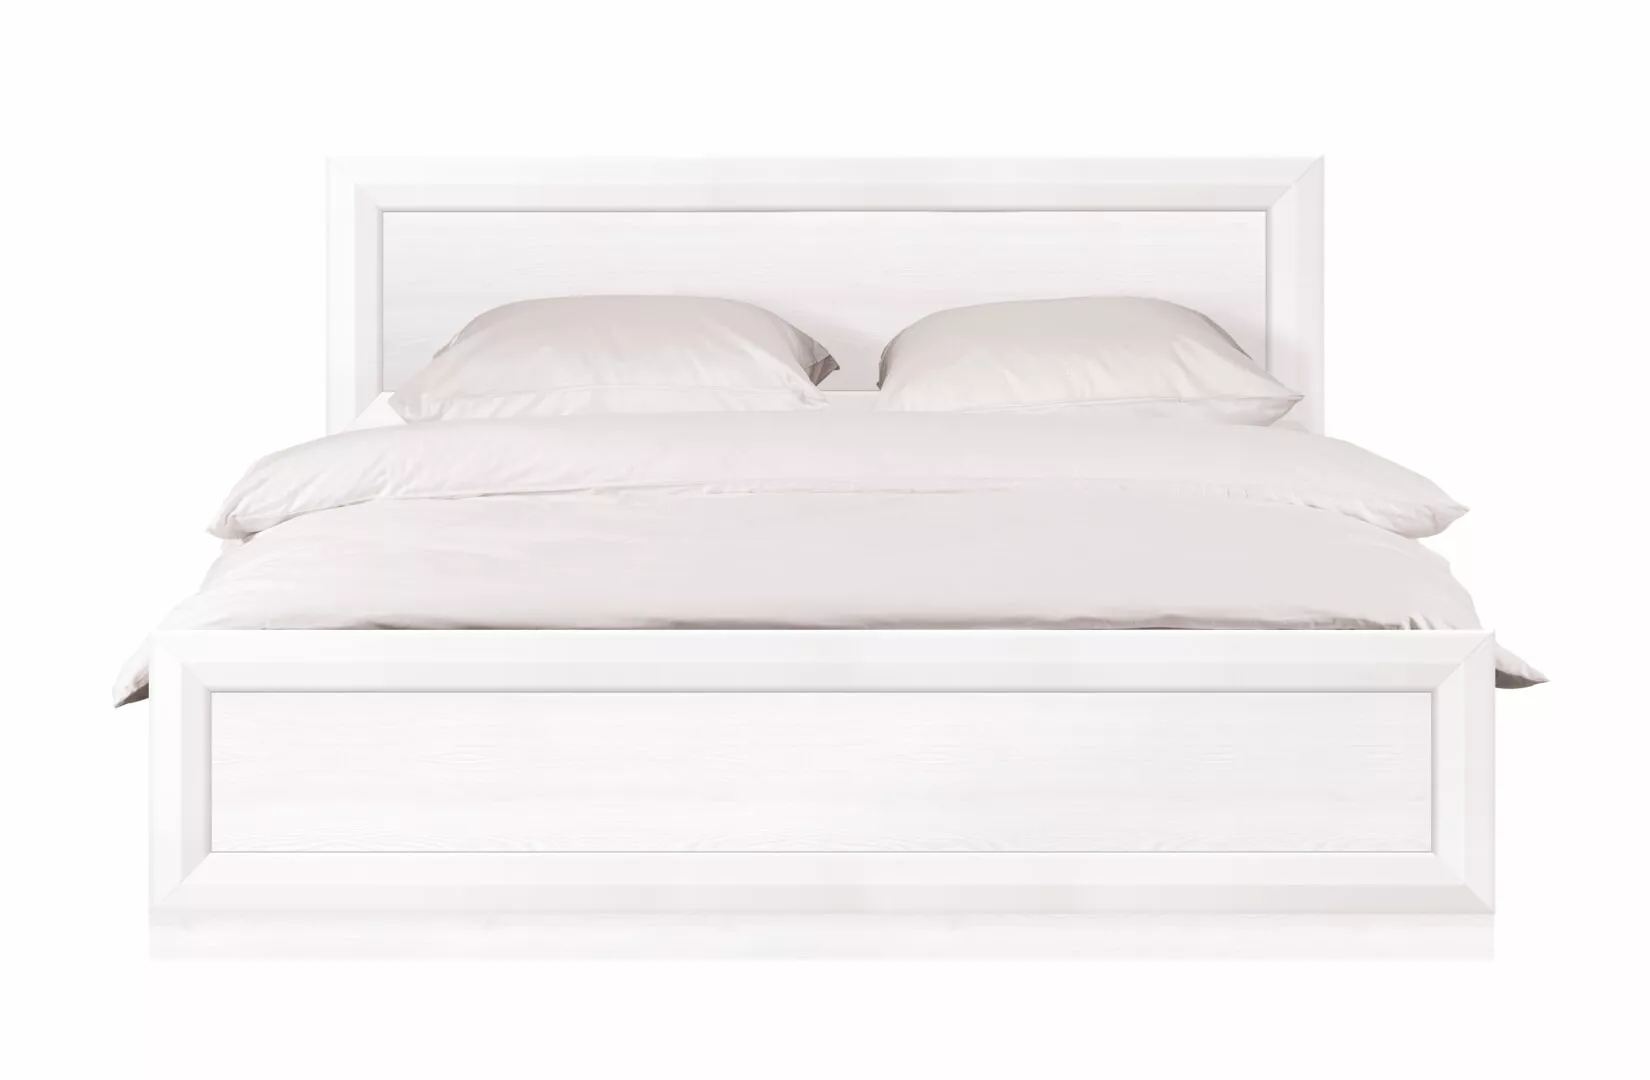 Спальня | Кровати | МАЛЬТА Кровать LOZ 180x200 Мебель ☆ IDEA в Севастополе| BRW, Брест anons